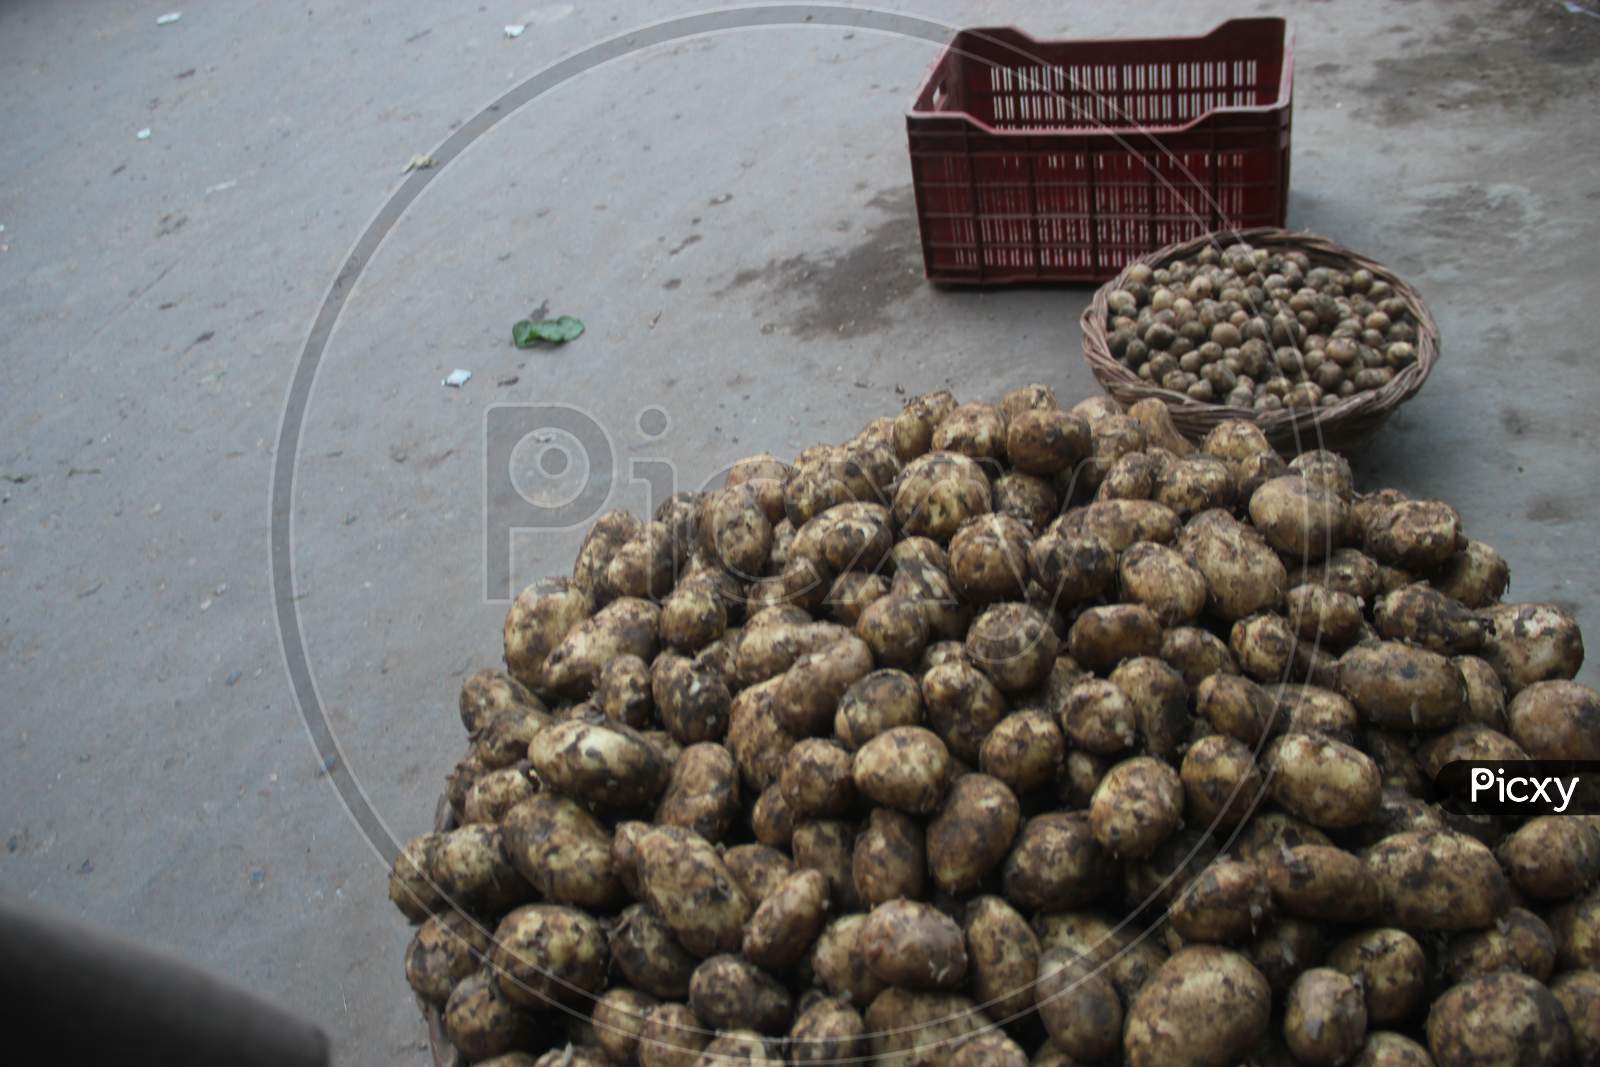 Freshly Harvested Potatoes In an Vegetable Vendor Stall